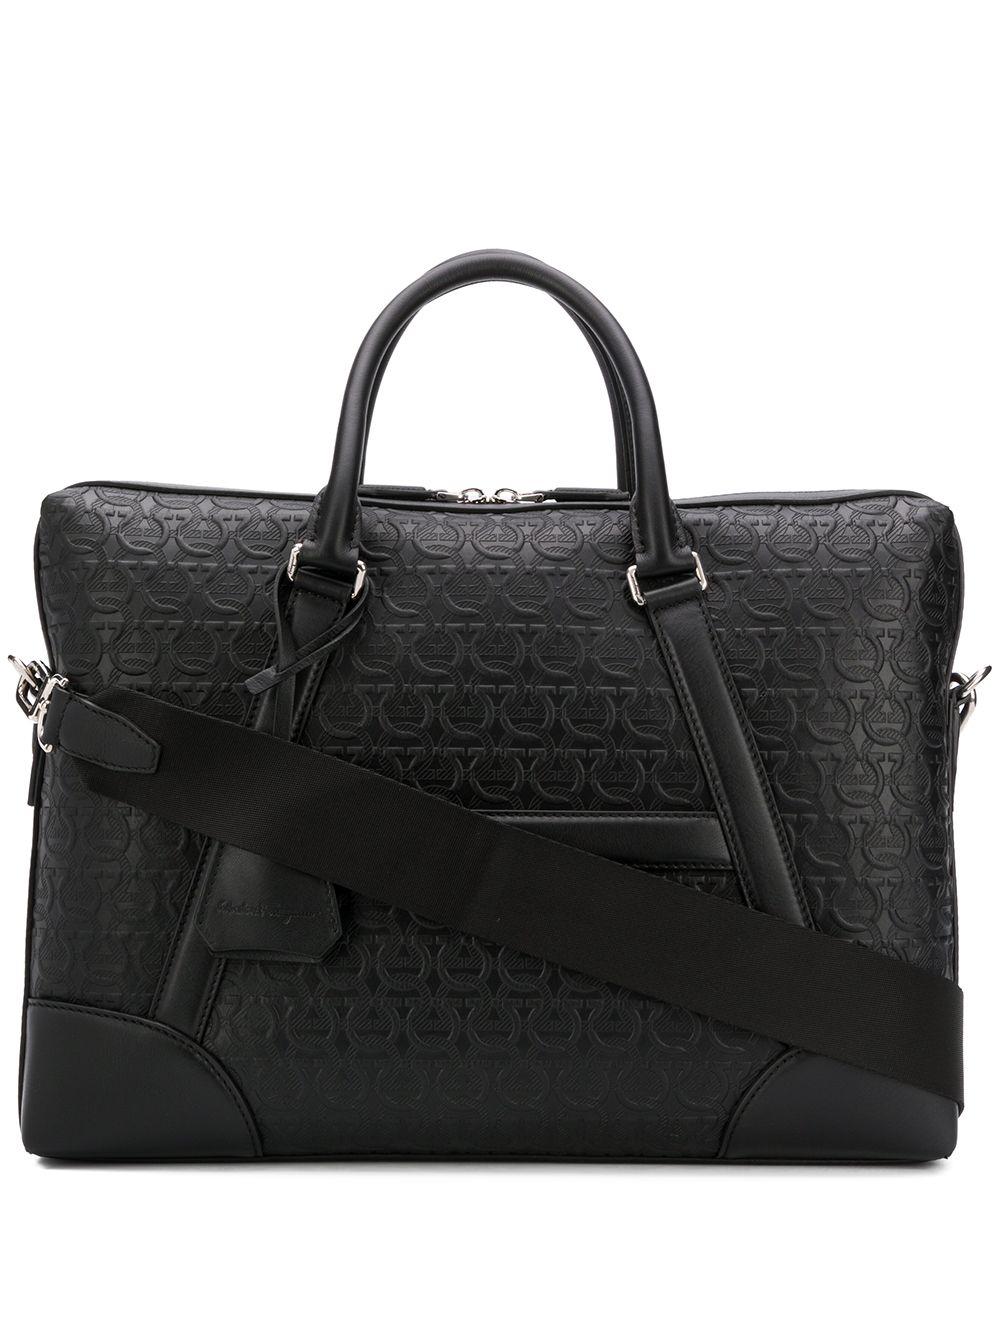 Ferragamo Leather Gancini Embossed Briefcase in Black for Men - Lyst